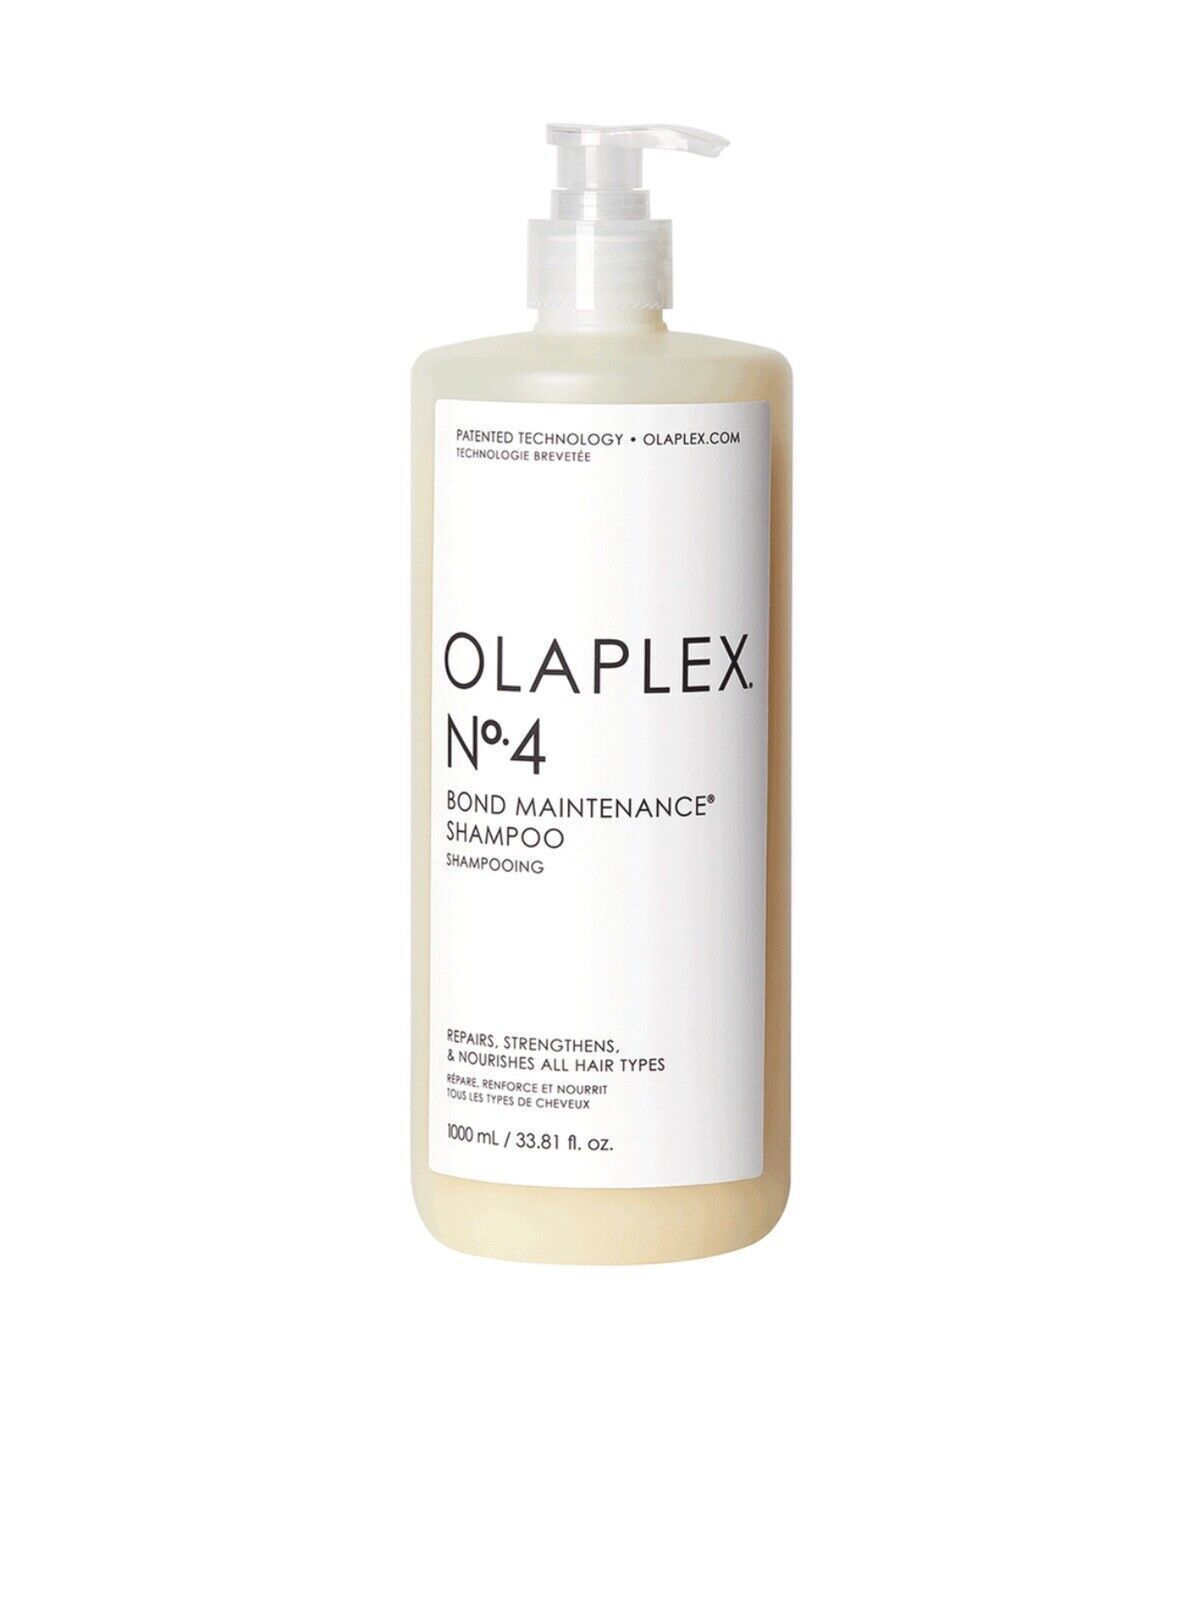 No.4 Bond Maintenance Shampoo Liter size